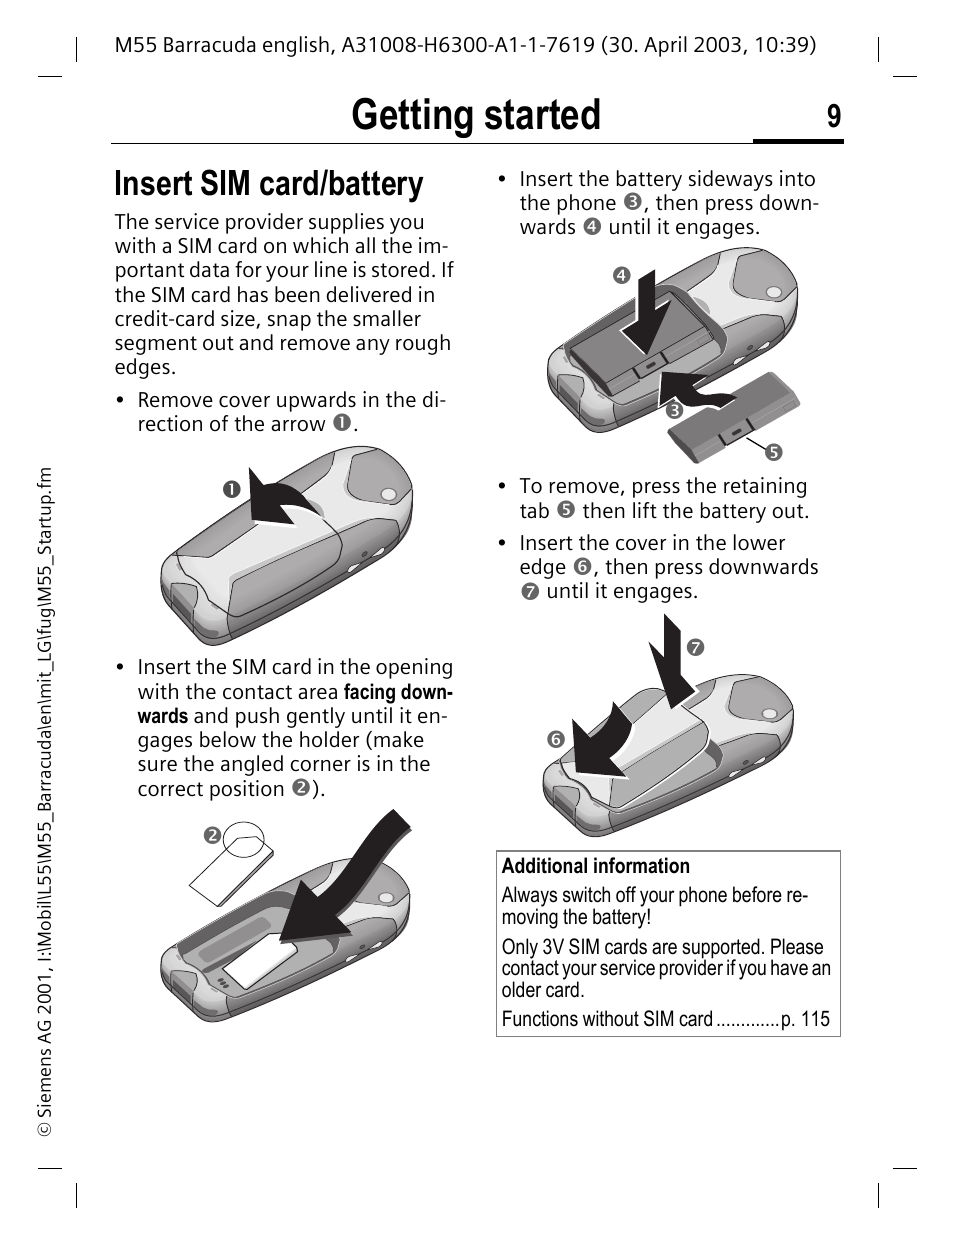 Ja spreiding platform Getting started, Insert sim card/battery | Siemens M55 User Manual | Page  10 / 140 | Original mode